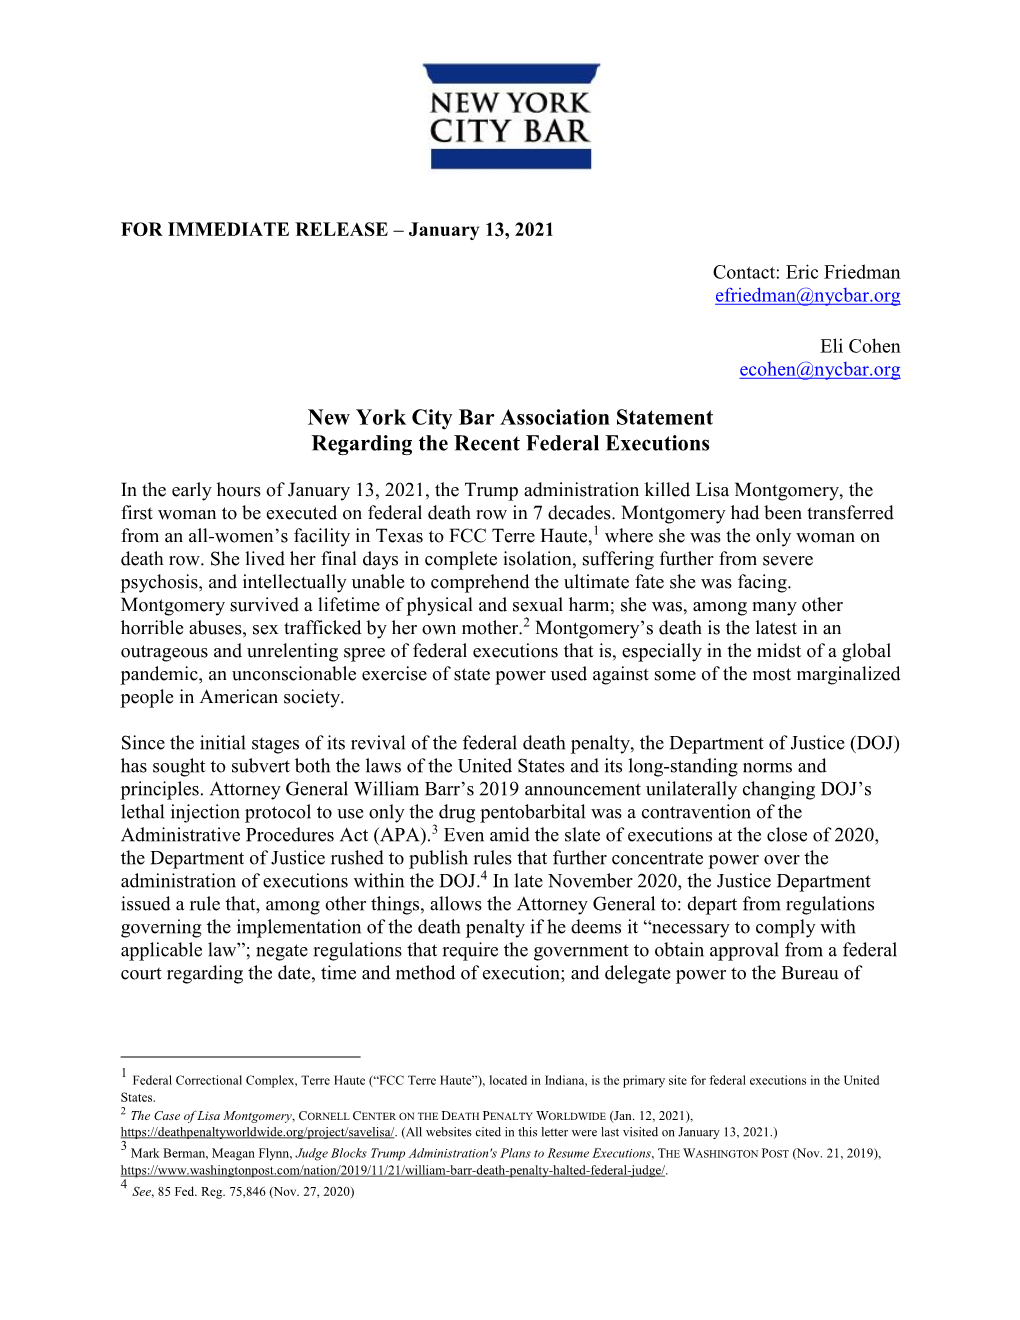 New York City Bar Association Statement Regarding the Recent Federal Executions